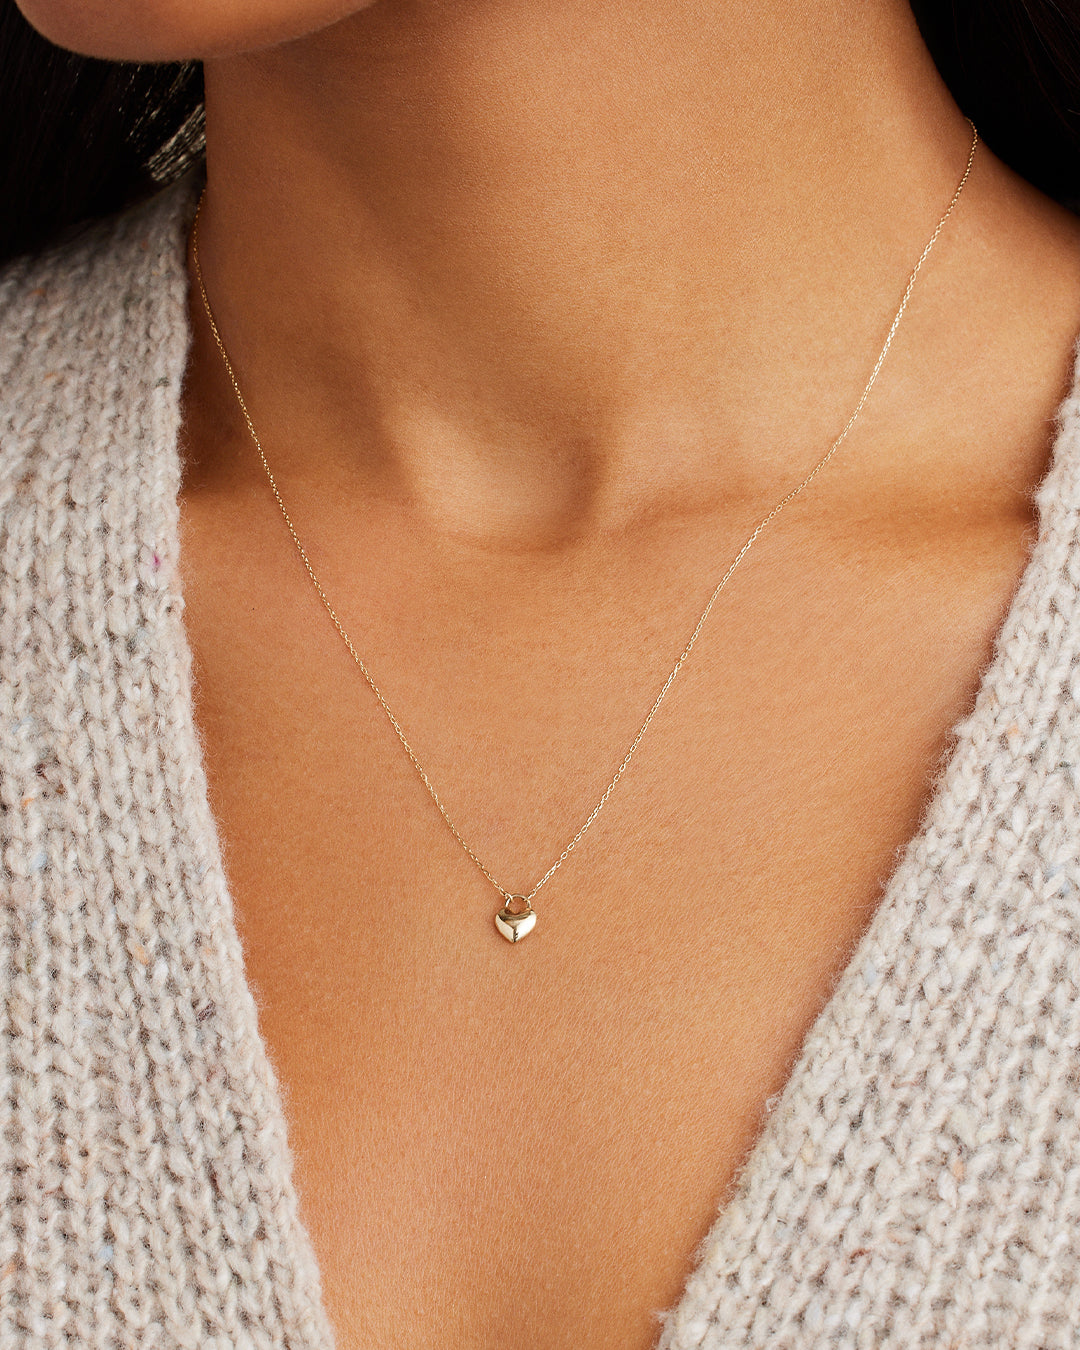 Women's 14K Solid Gold Diamond Lock Necklace | The Gold Goddess